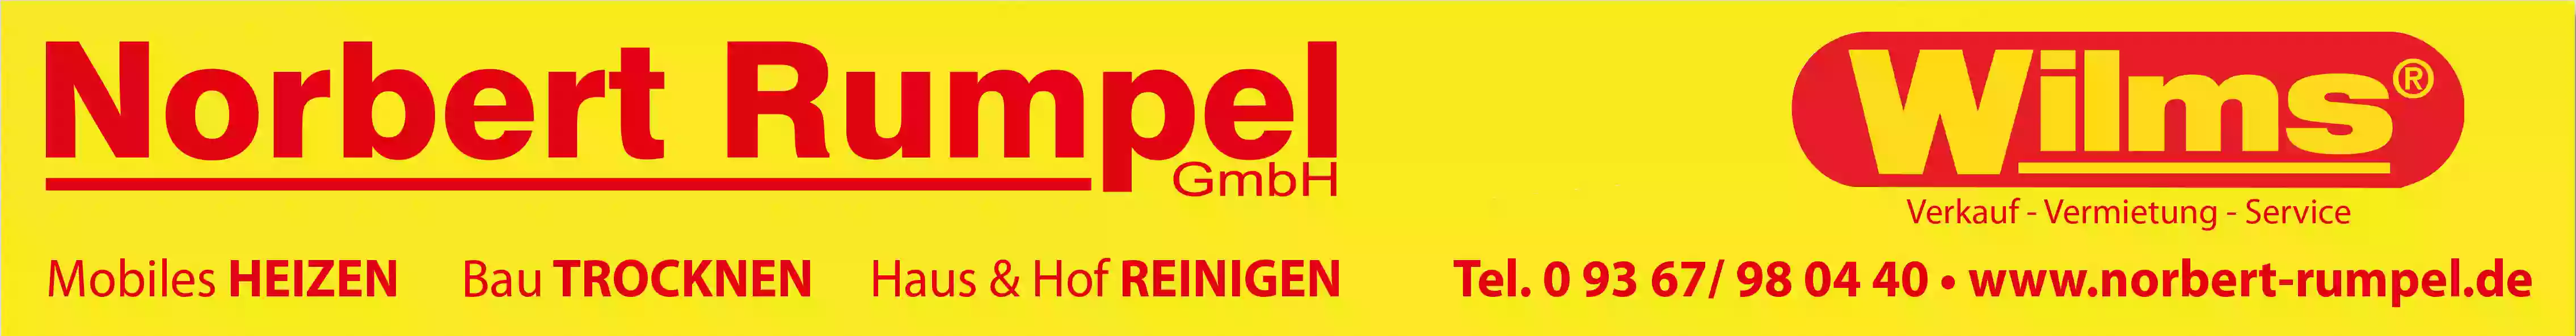 Norbert Rumpel GmbH